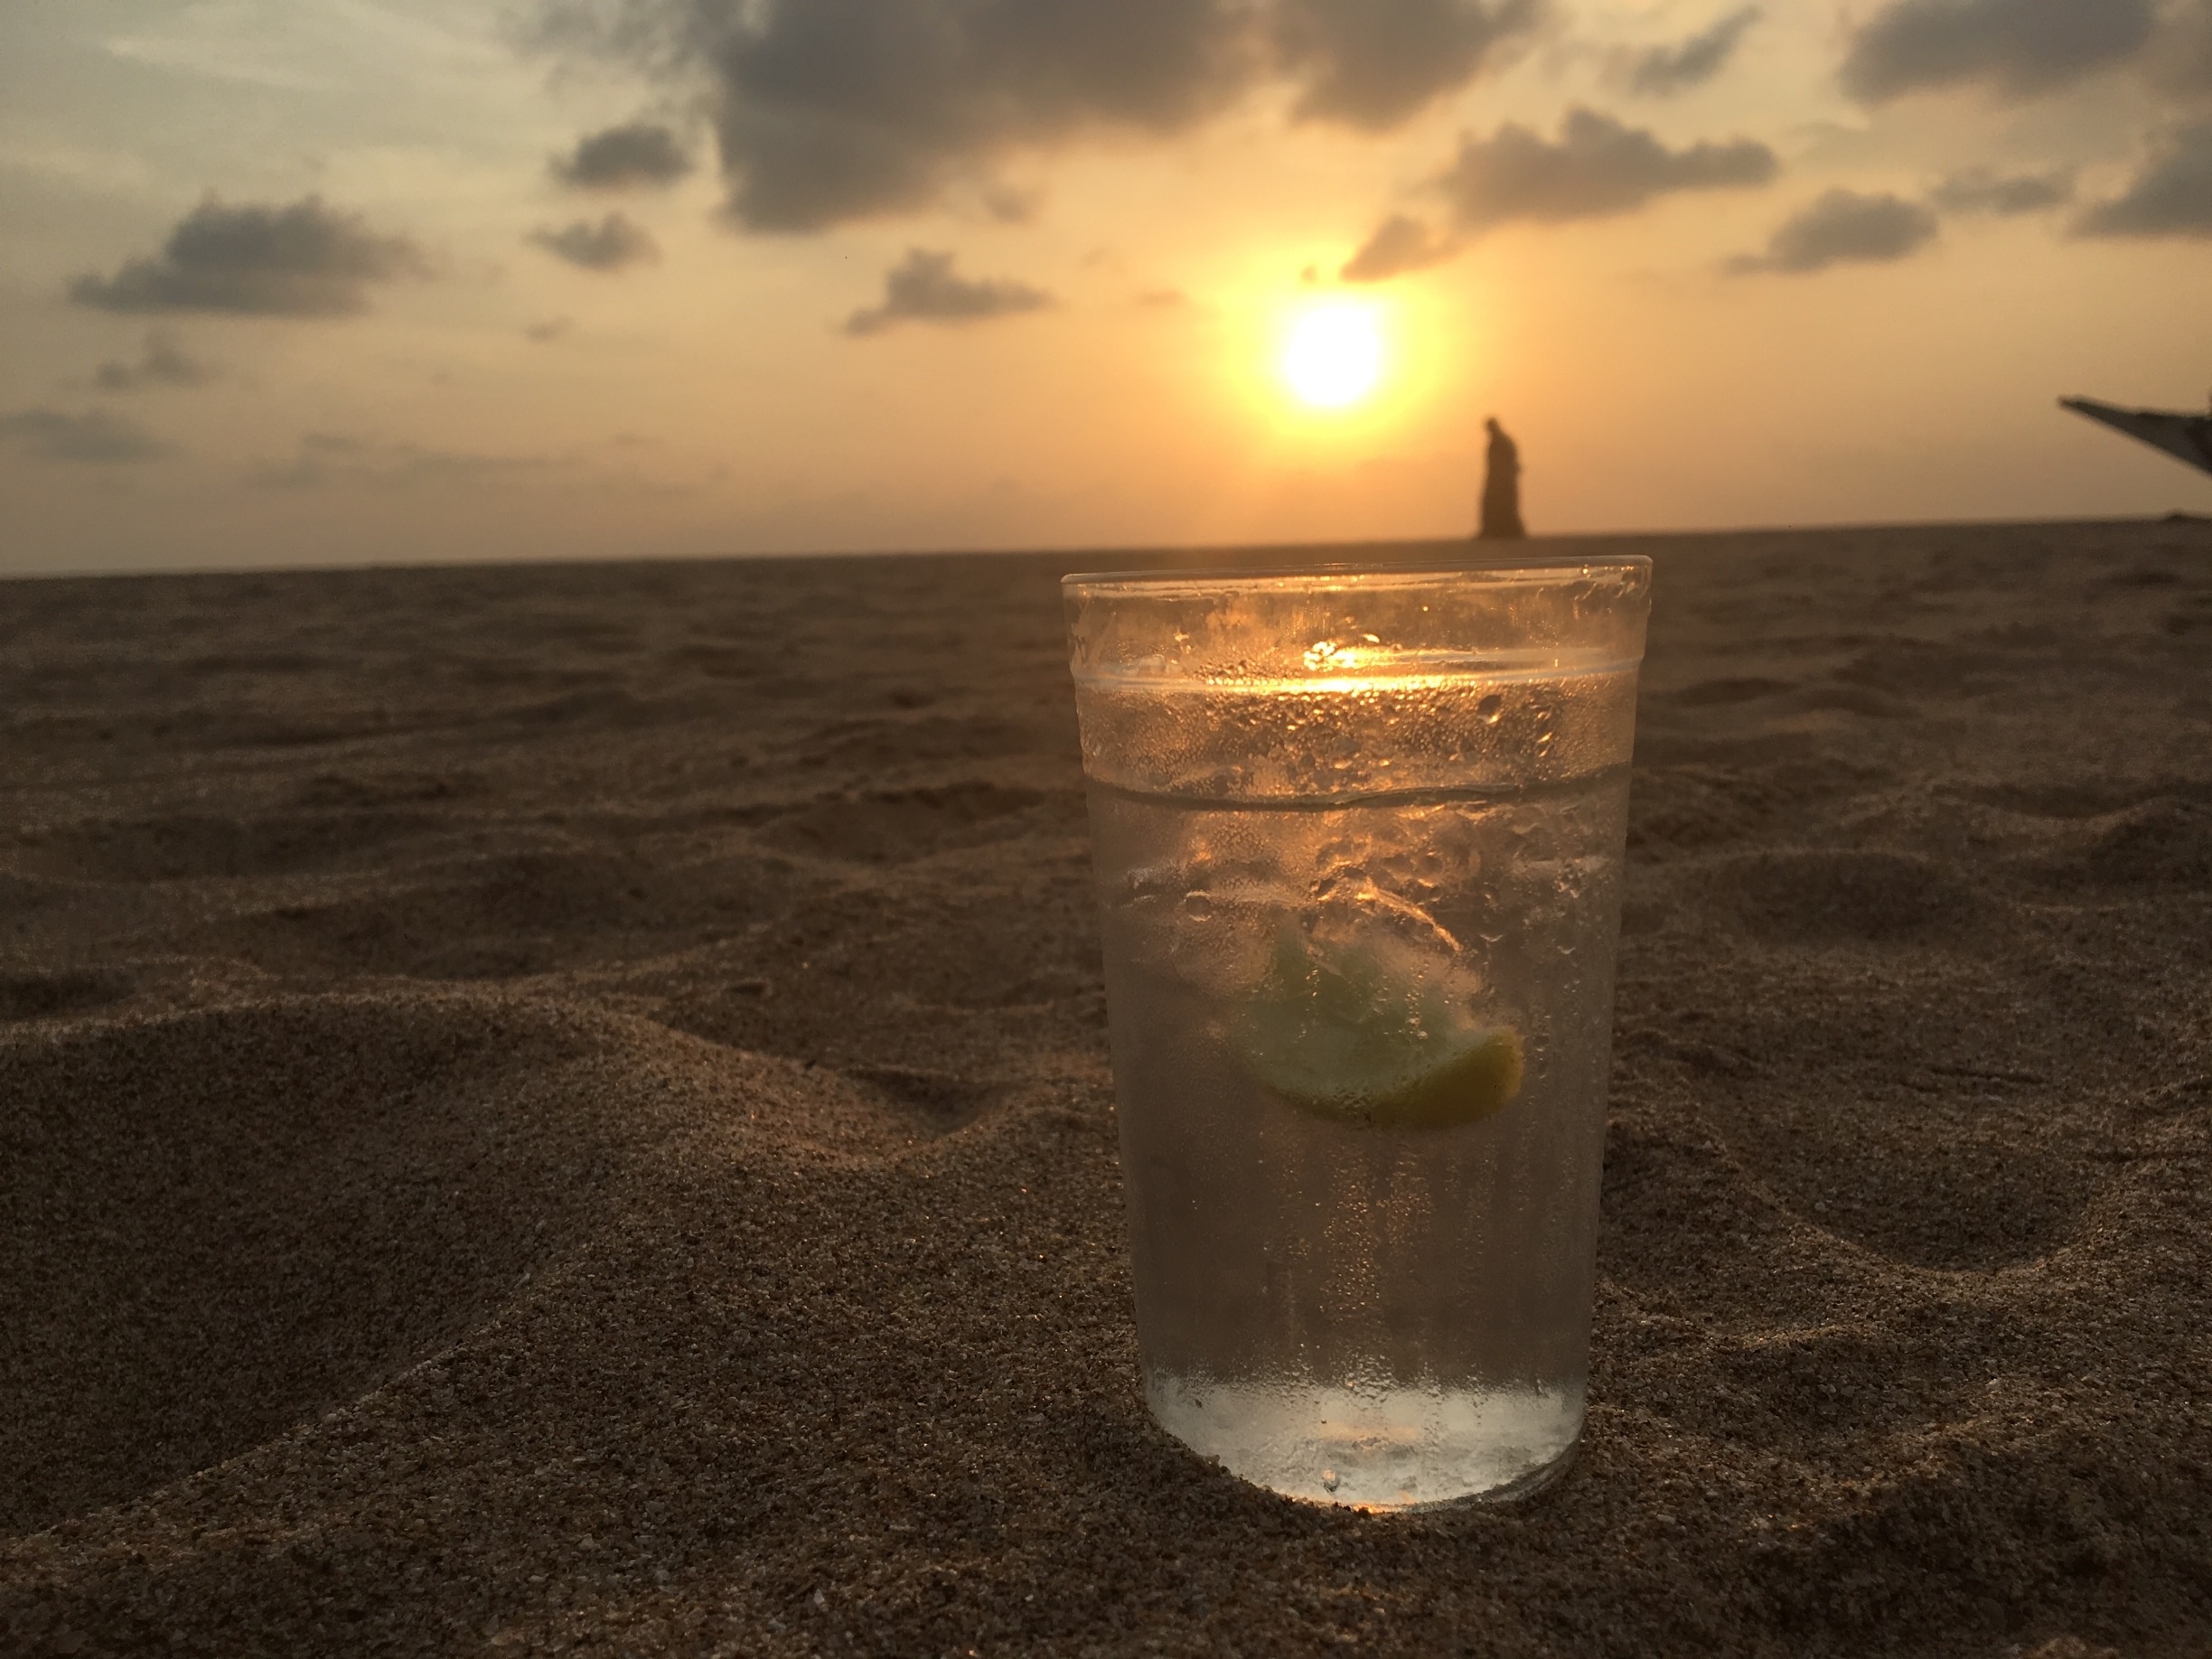 Making love to my Gin n tonic at sunset 🌅 

#travelsrilanka #beautifulsunsets #nofiler #sun #sand #sea